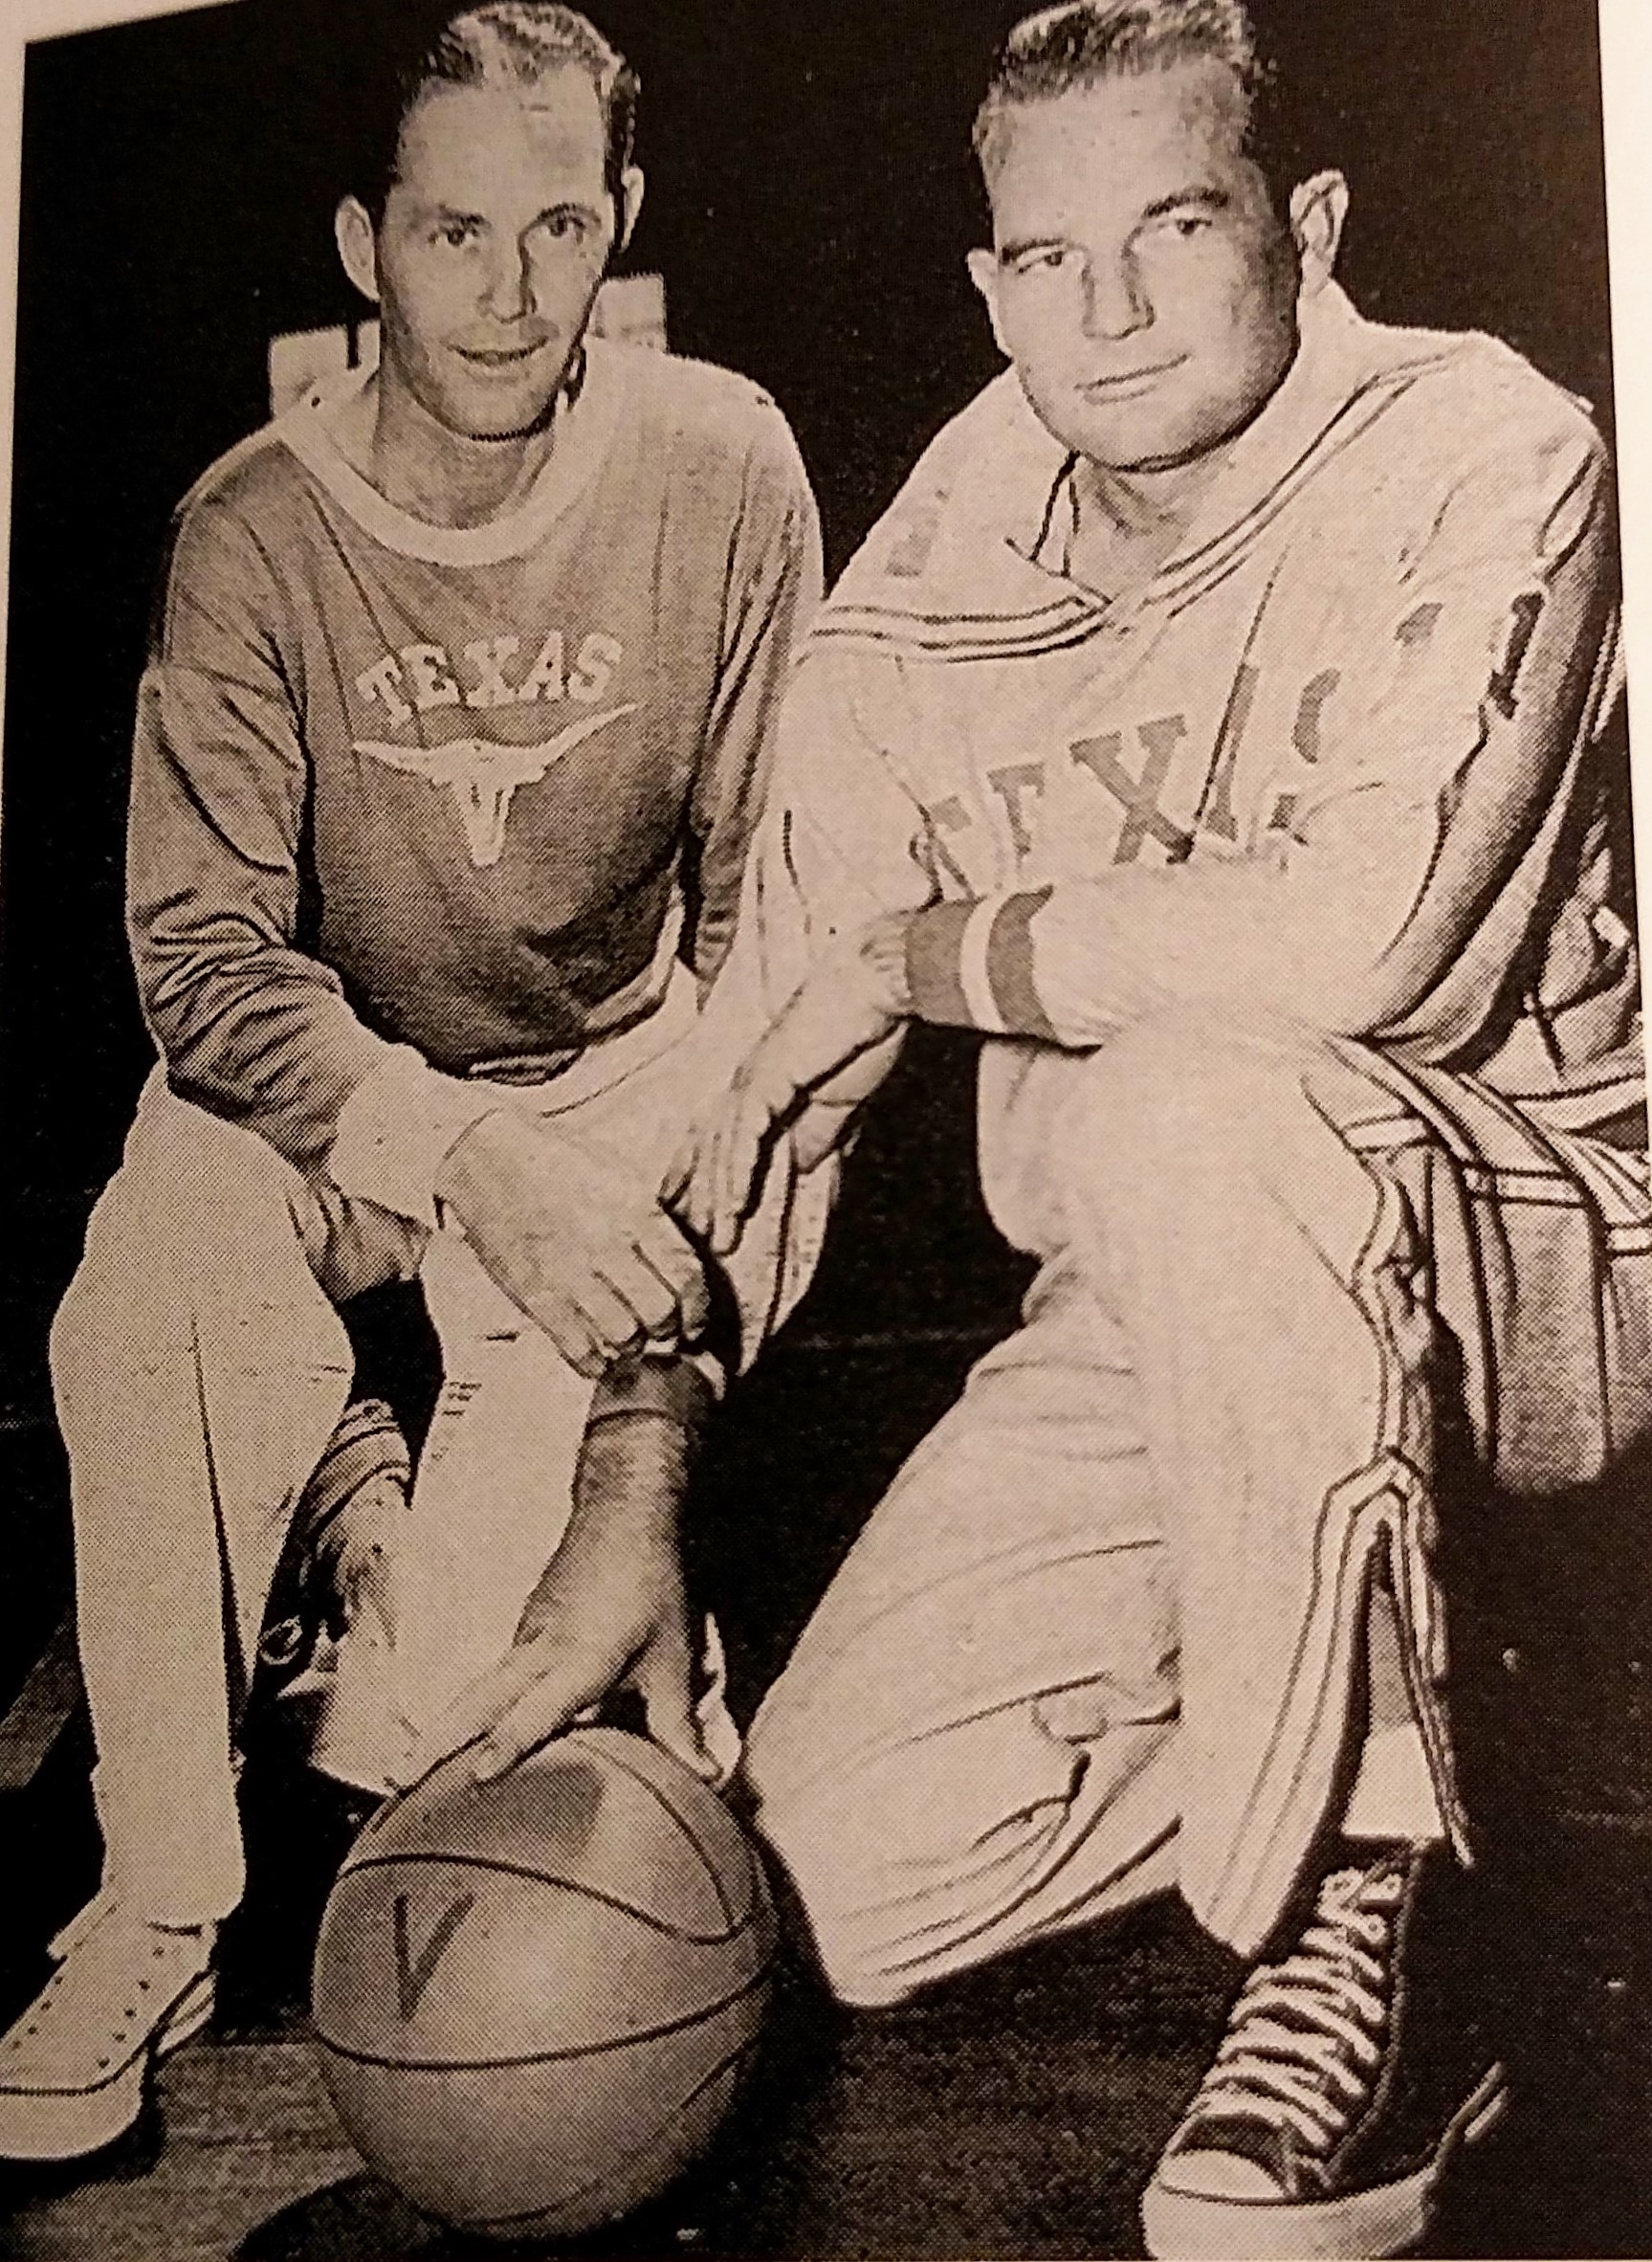 Coach Hughes and Coach Hull  (right)